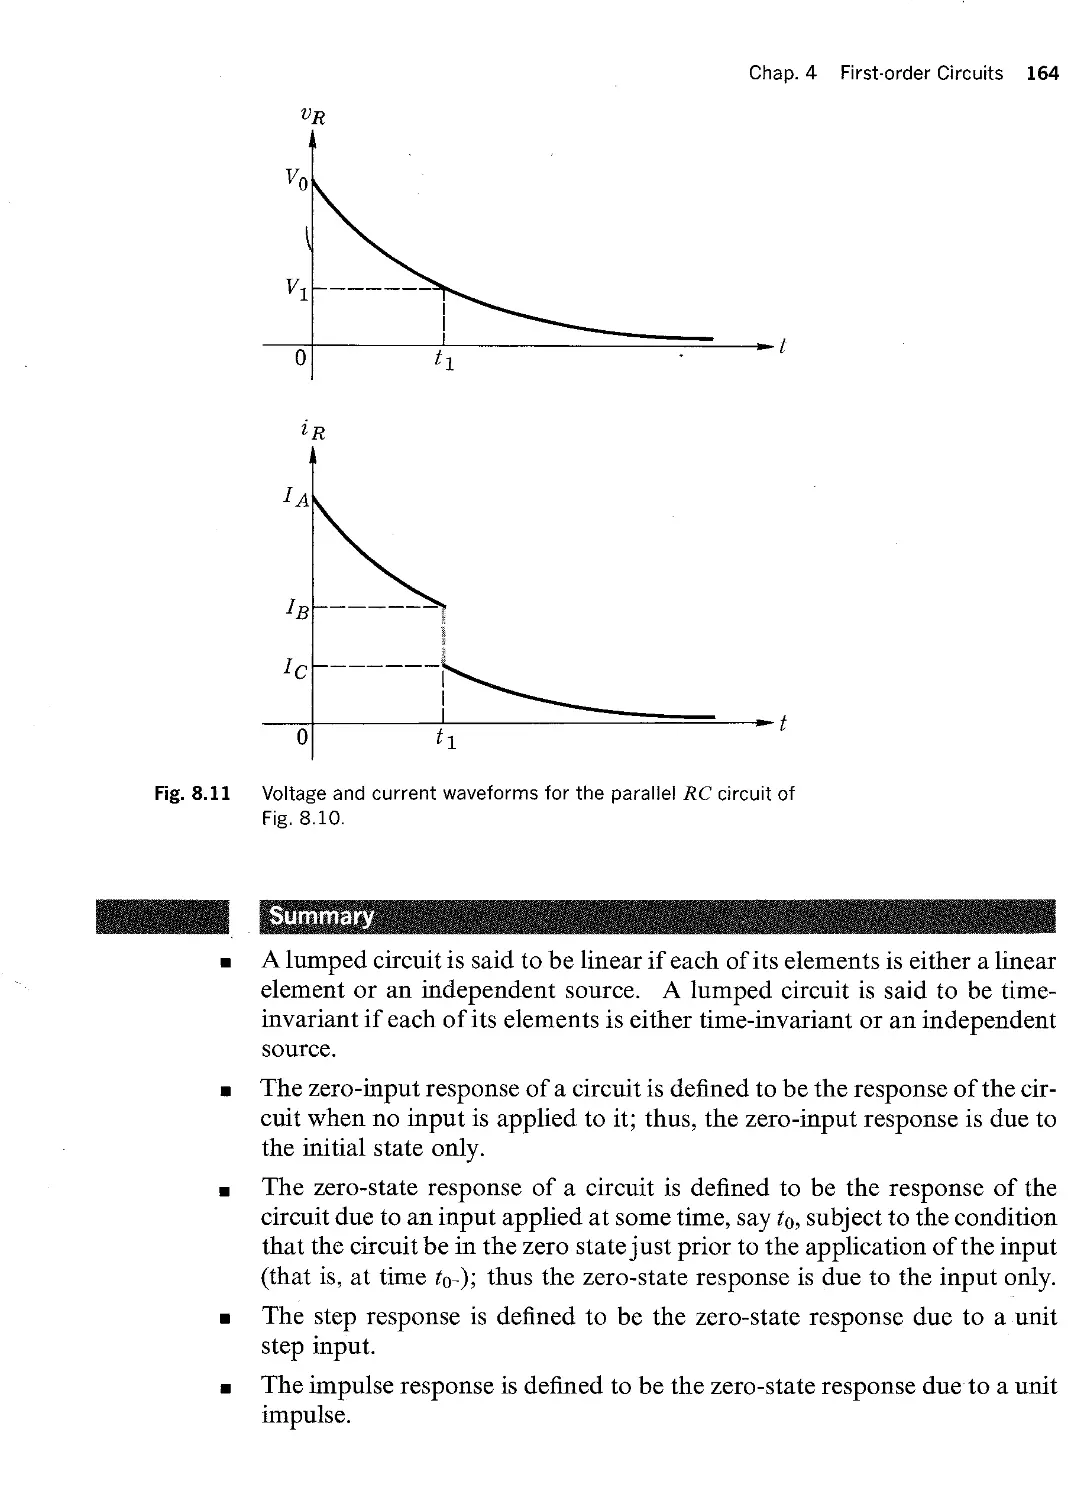 4 - Physical Interpretation of Poles and Zeros